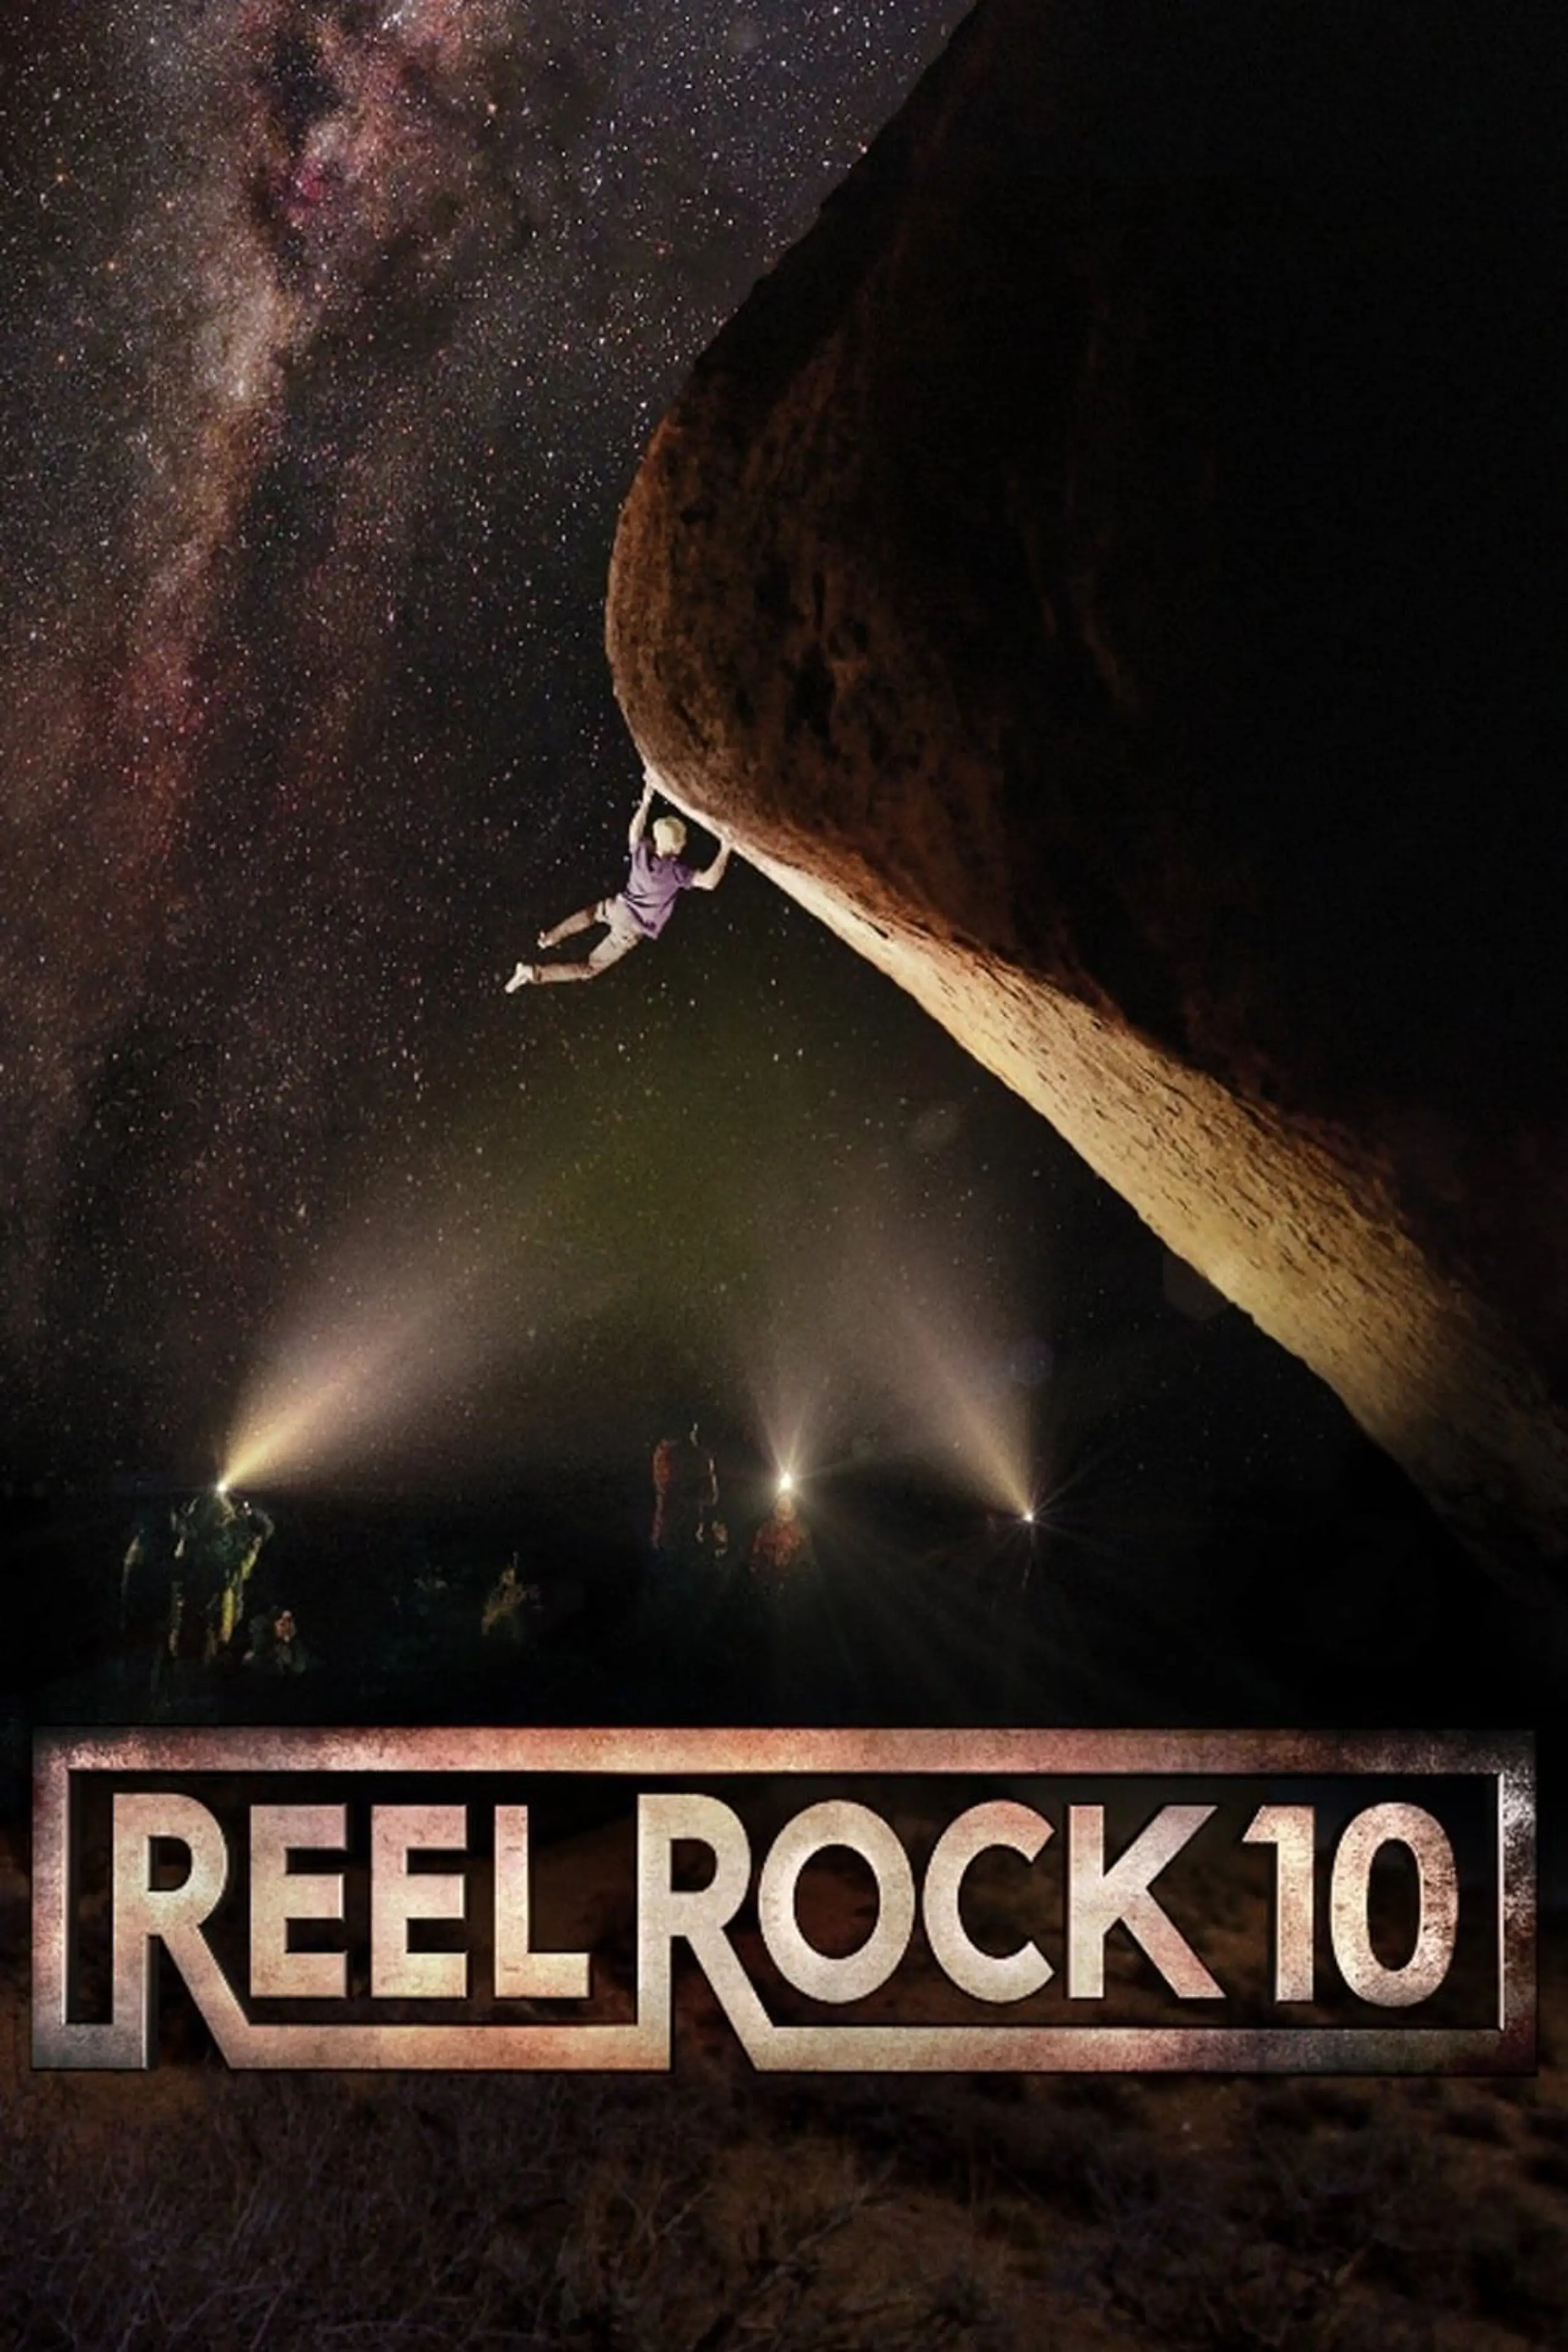 Reel Rock 10